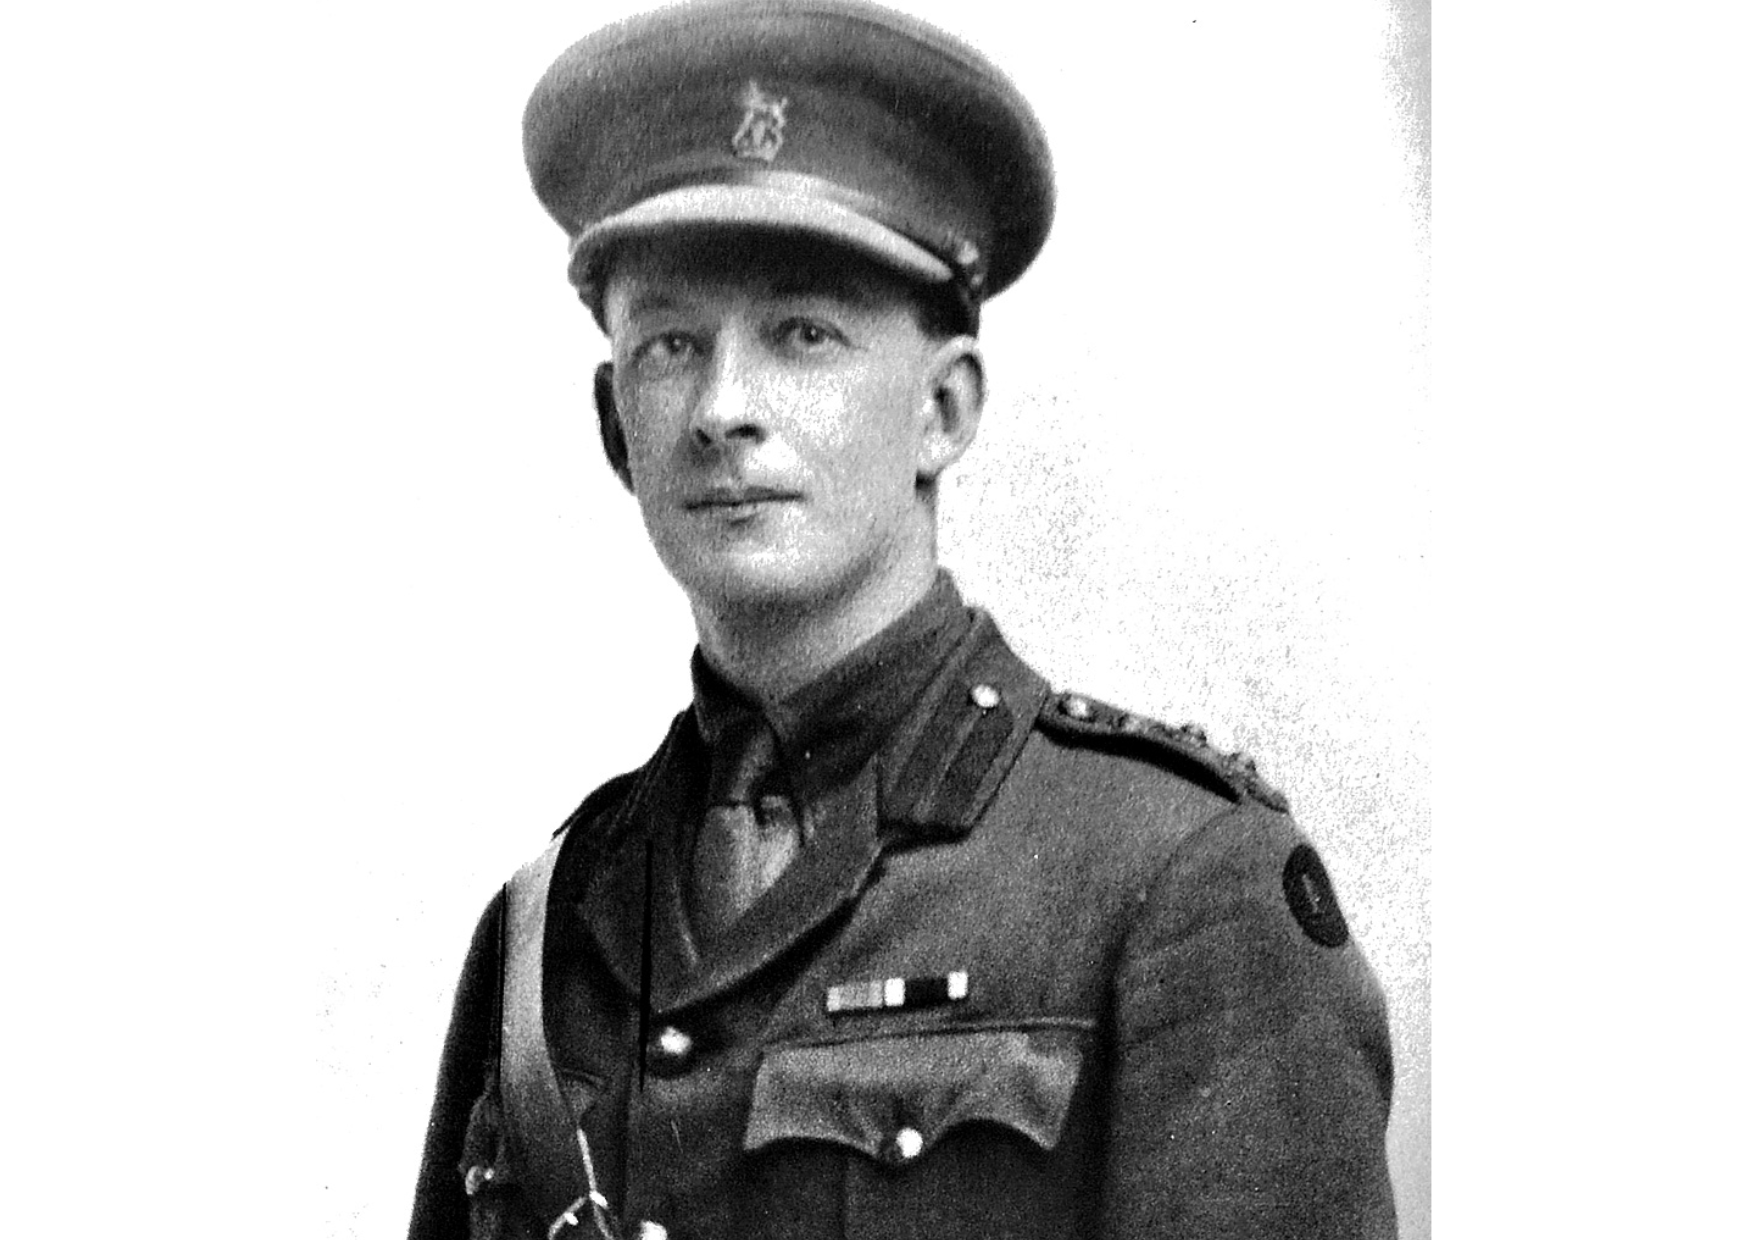 Boggabri lad Roy Stanley McGregor was 24 when he enlisted in 1914